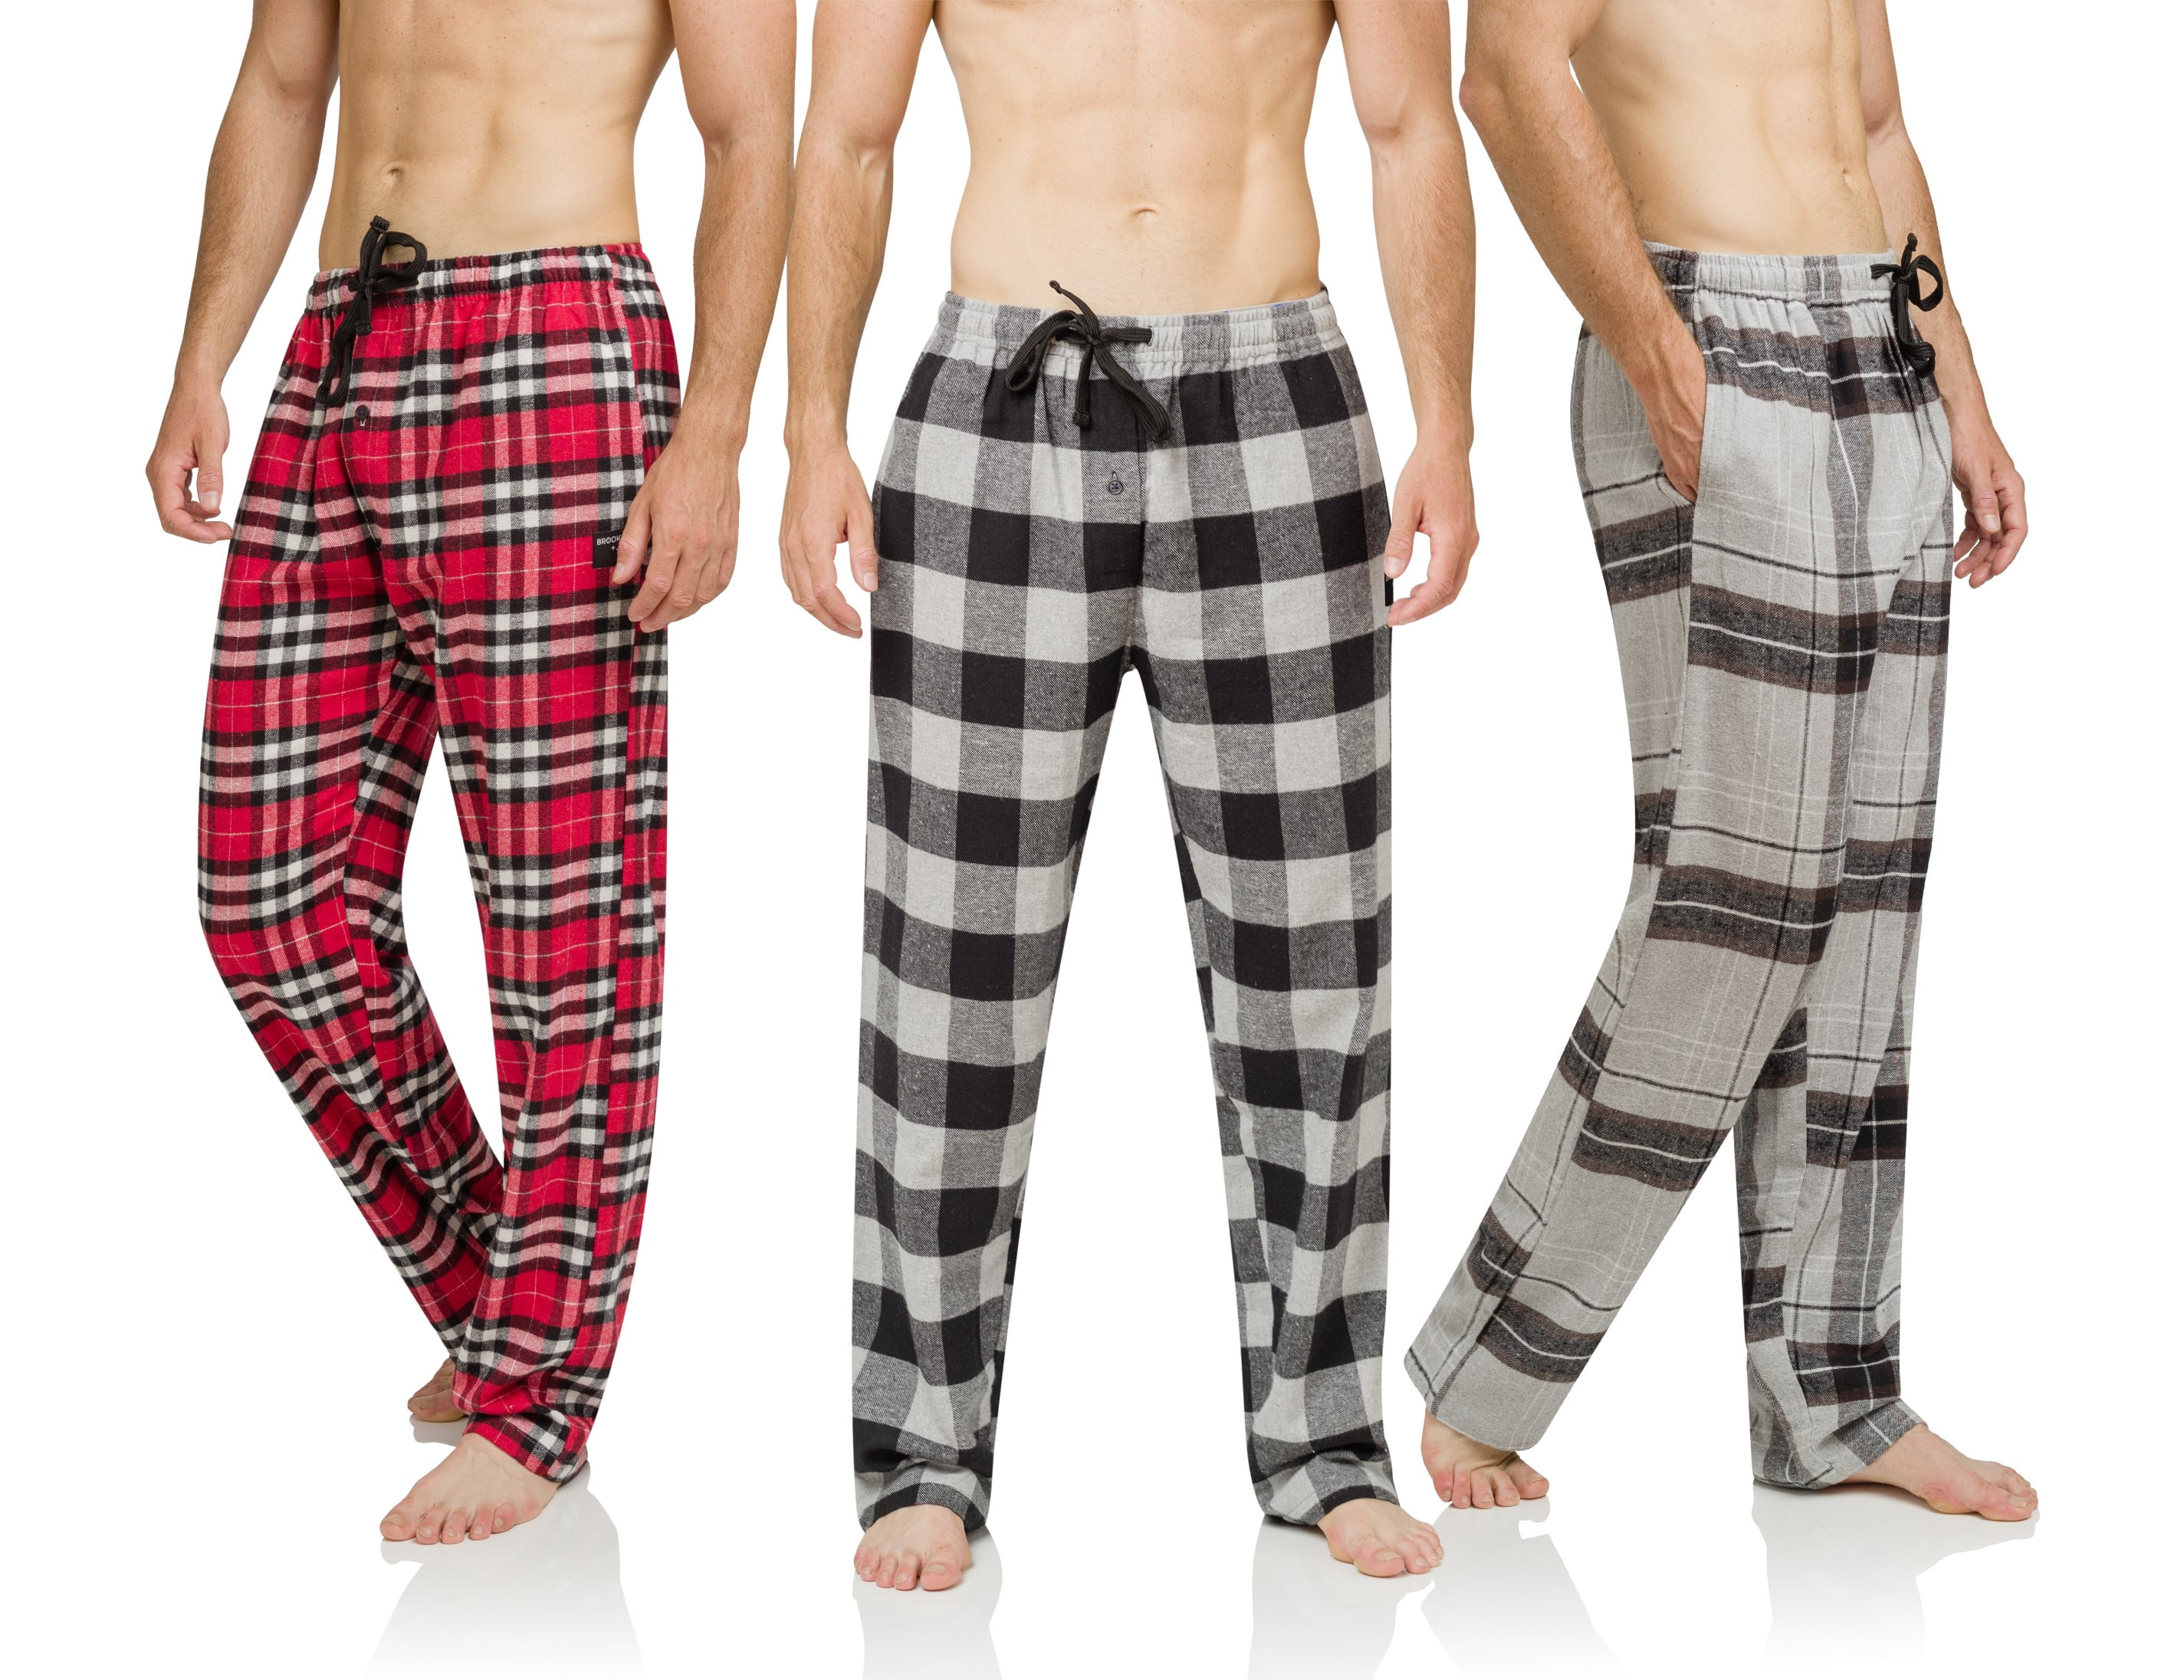 Details about   Mens Pyjama Bottom Extra Soft Cotton Woven Pyjama Sleeping PJ's Nightwear Bottom 